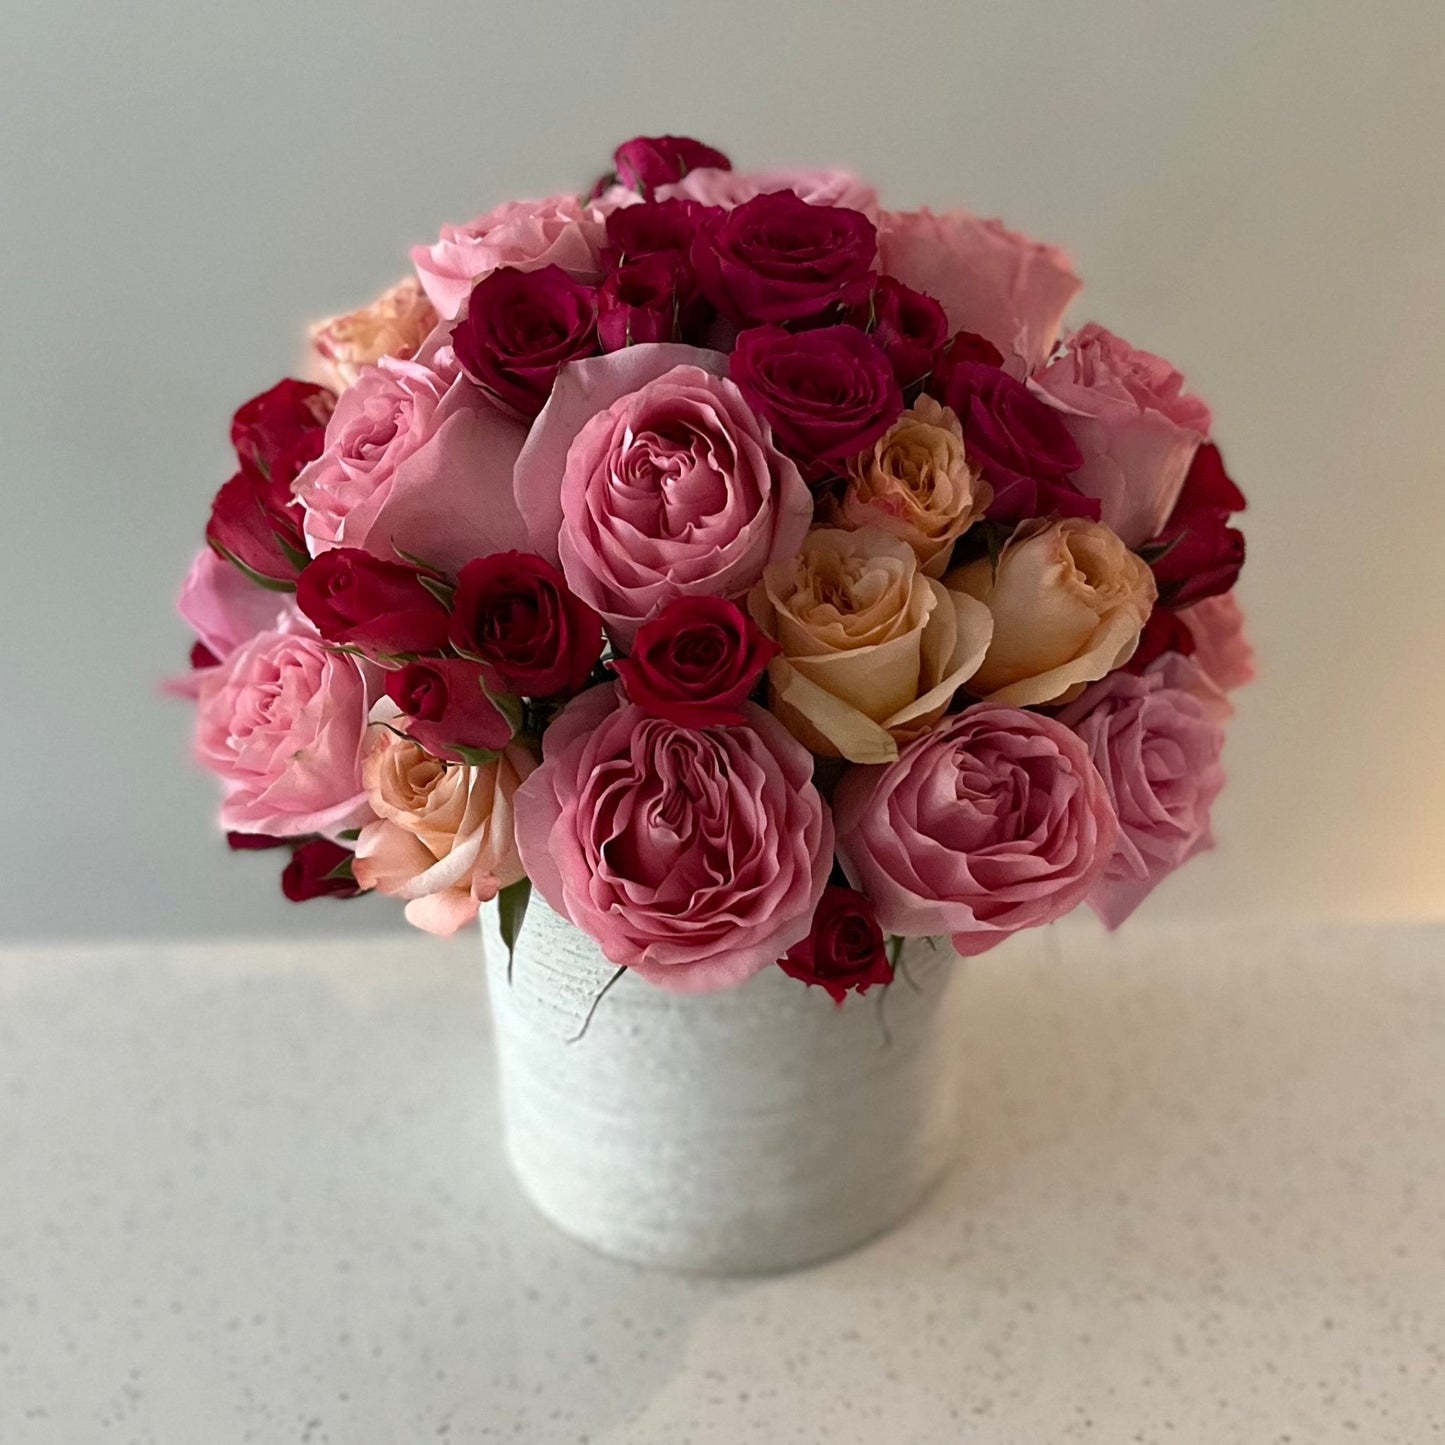 Lovely Medley Bouquet